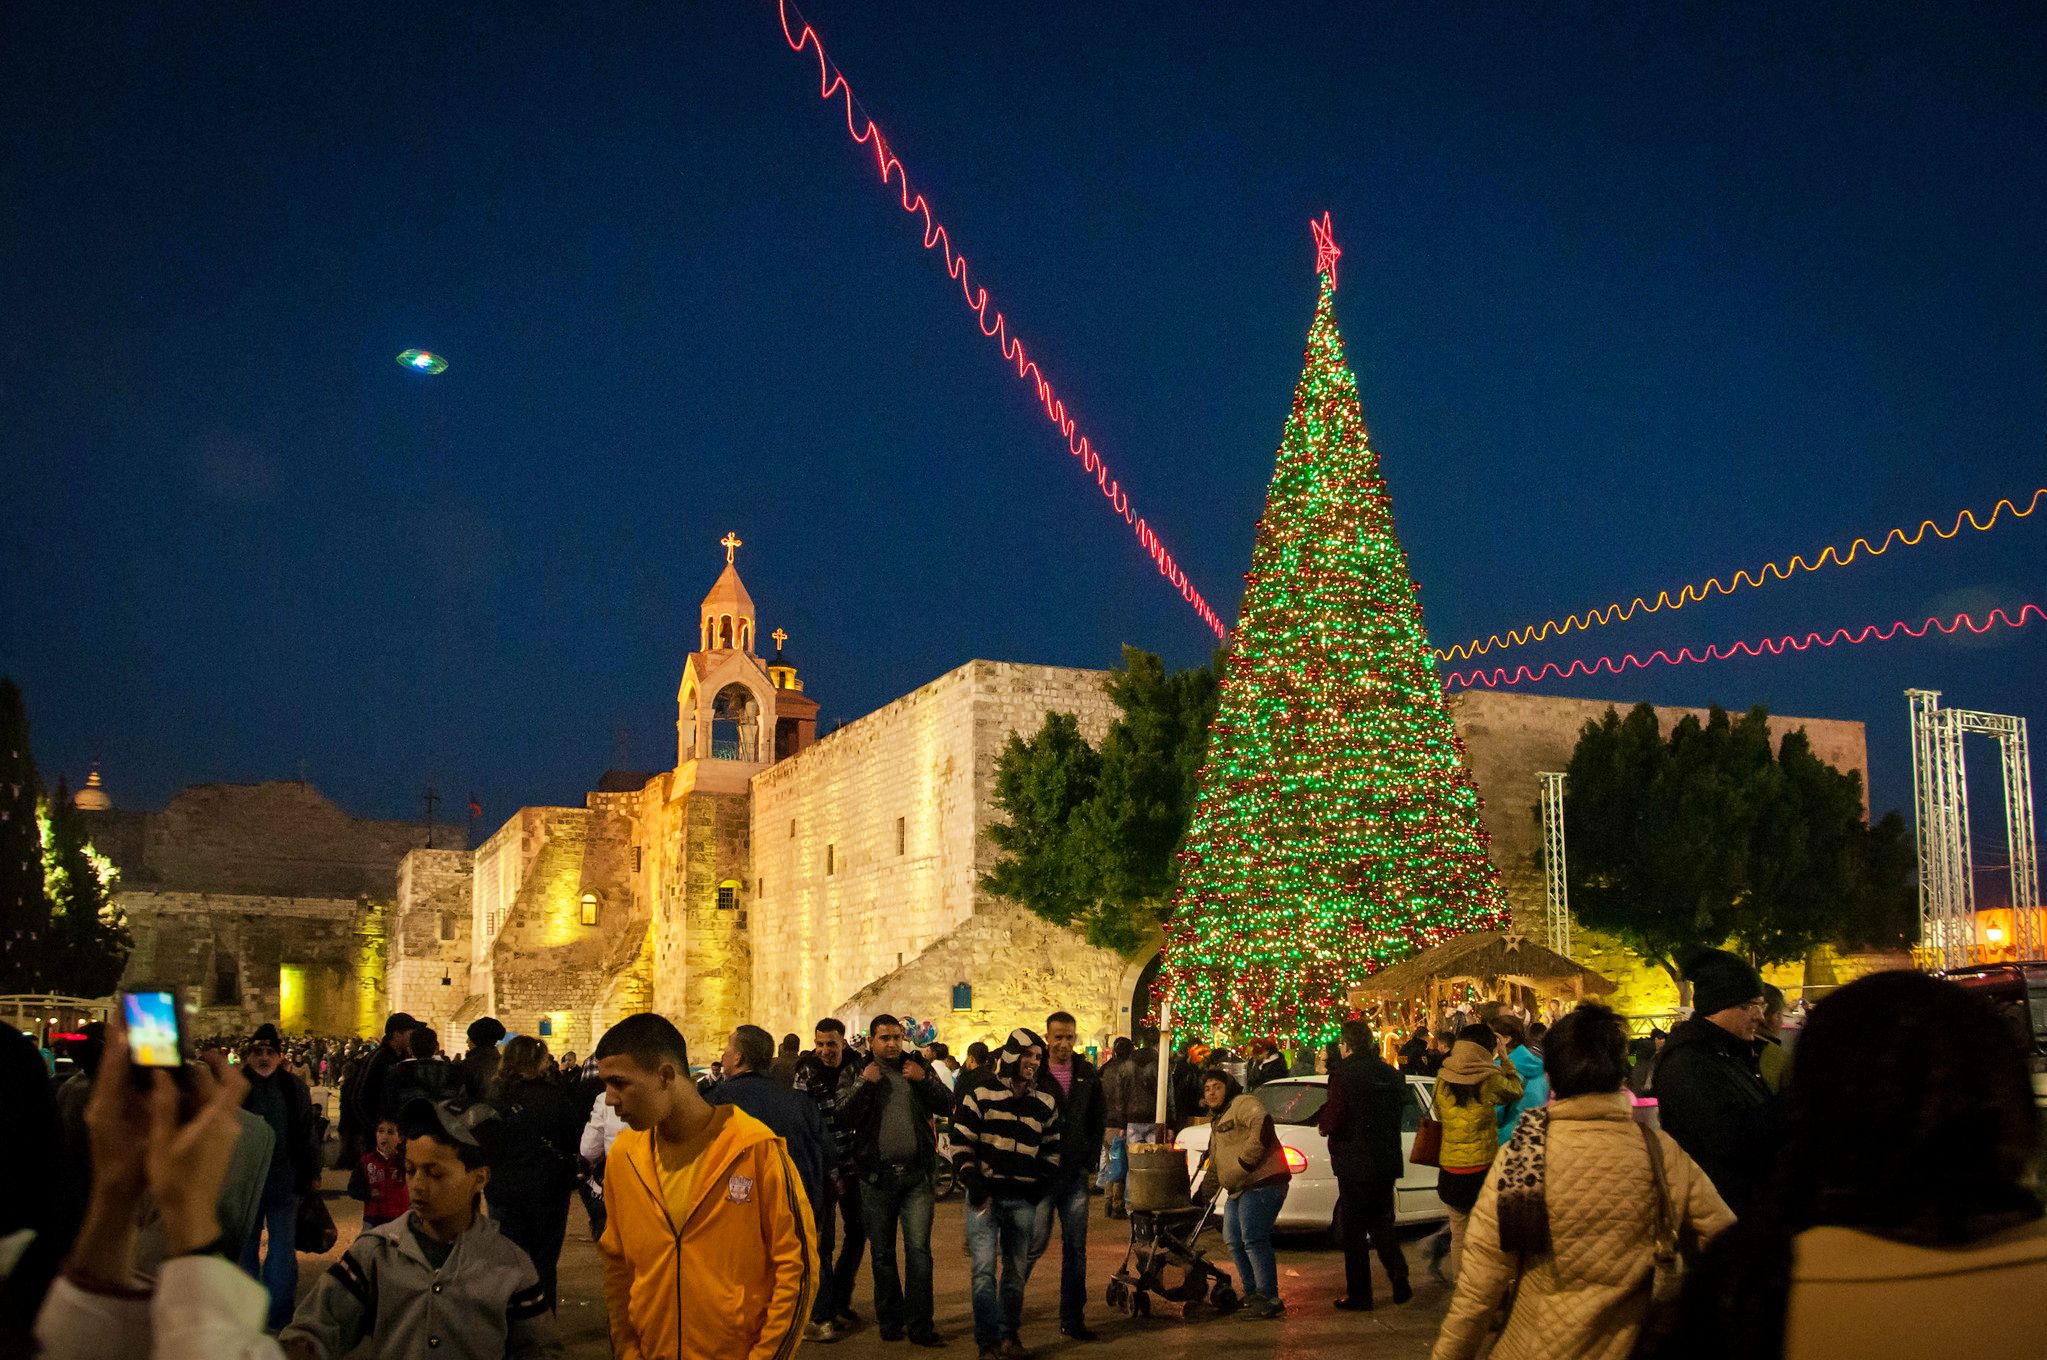 Bethlehem, Palestine for the true Christmas story